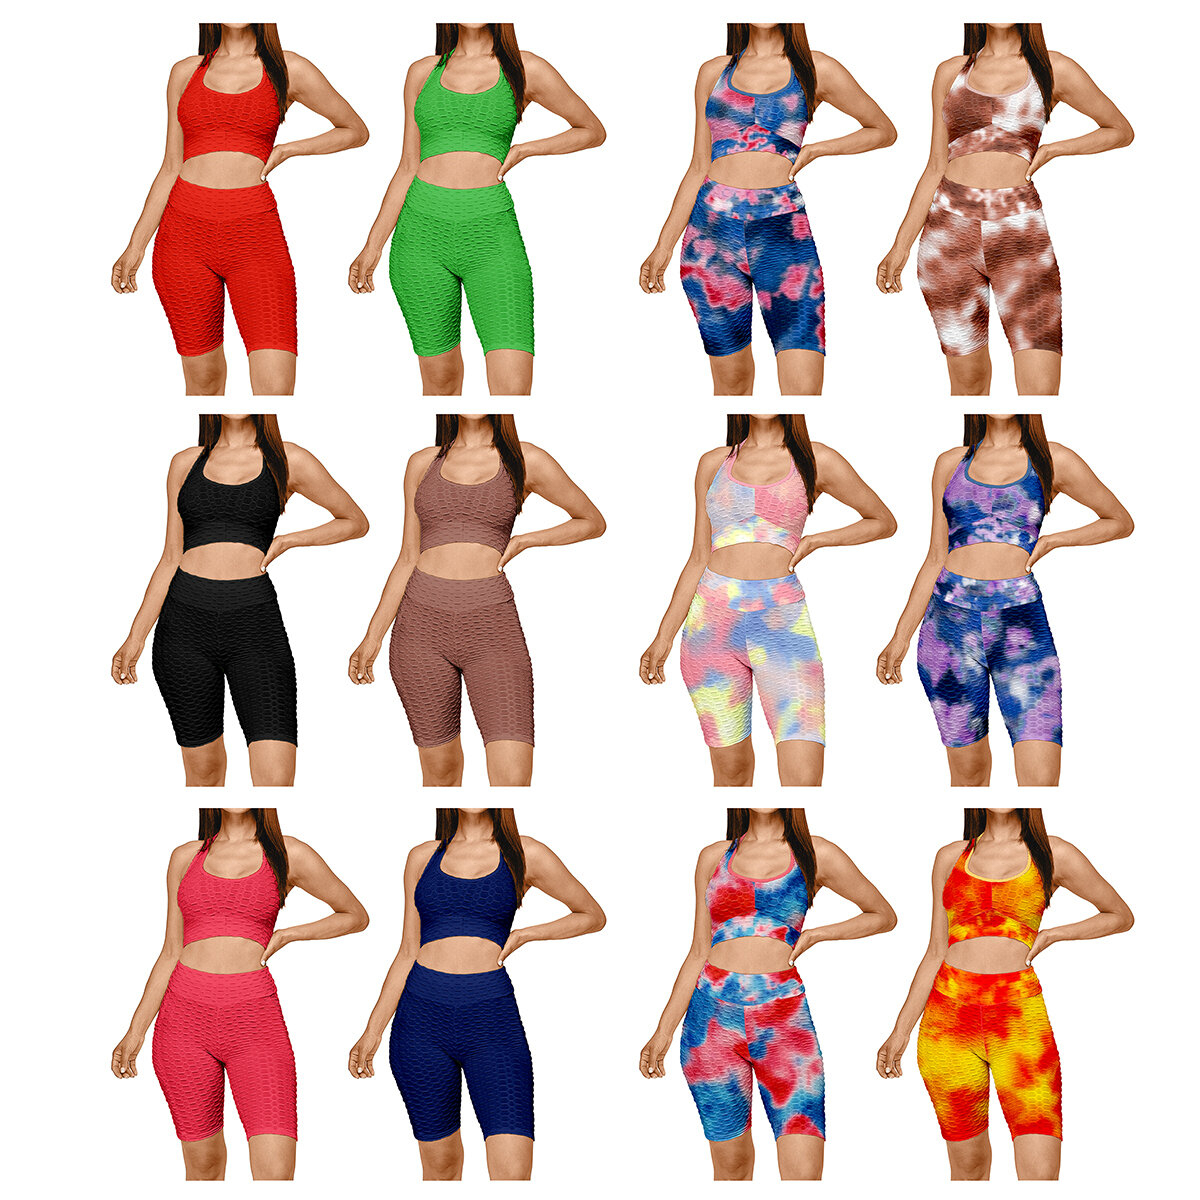 Women's Anti Cellulite Sports Bra & High Waisted Biker Shorts Workout Yoga Set - Tie-dye, Large